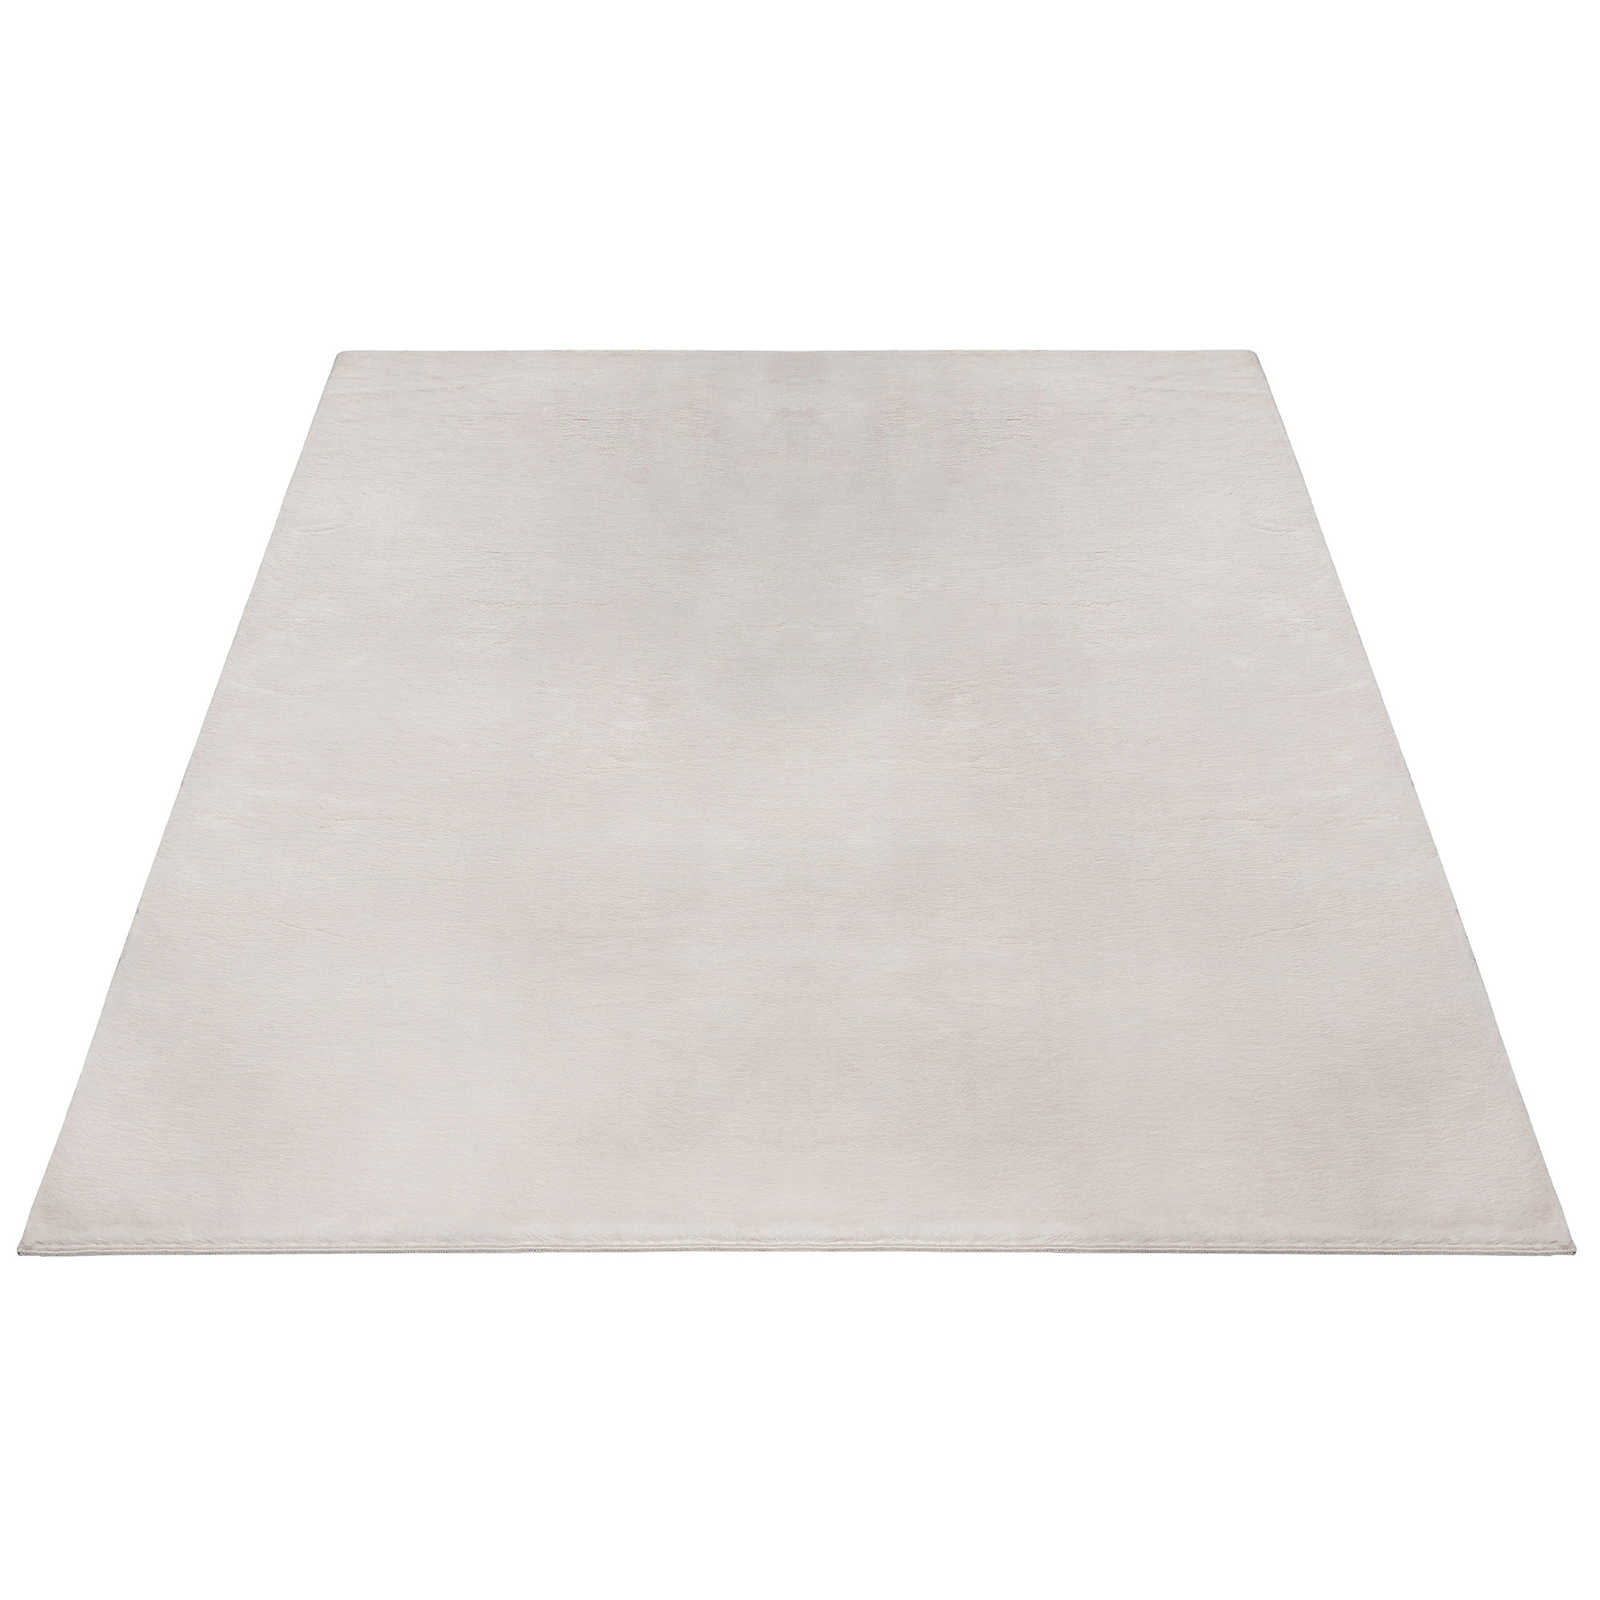 Cuddly soft high pile carpet in light beige - 290 x 200 cm
